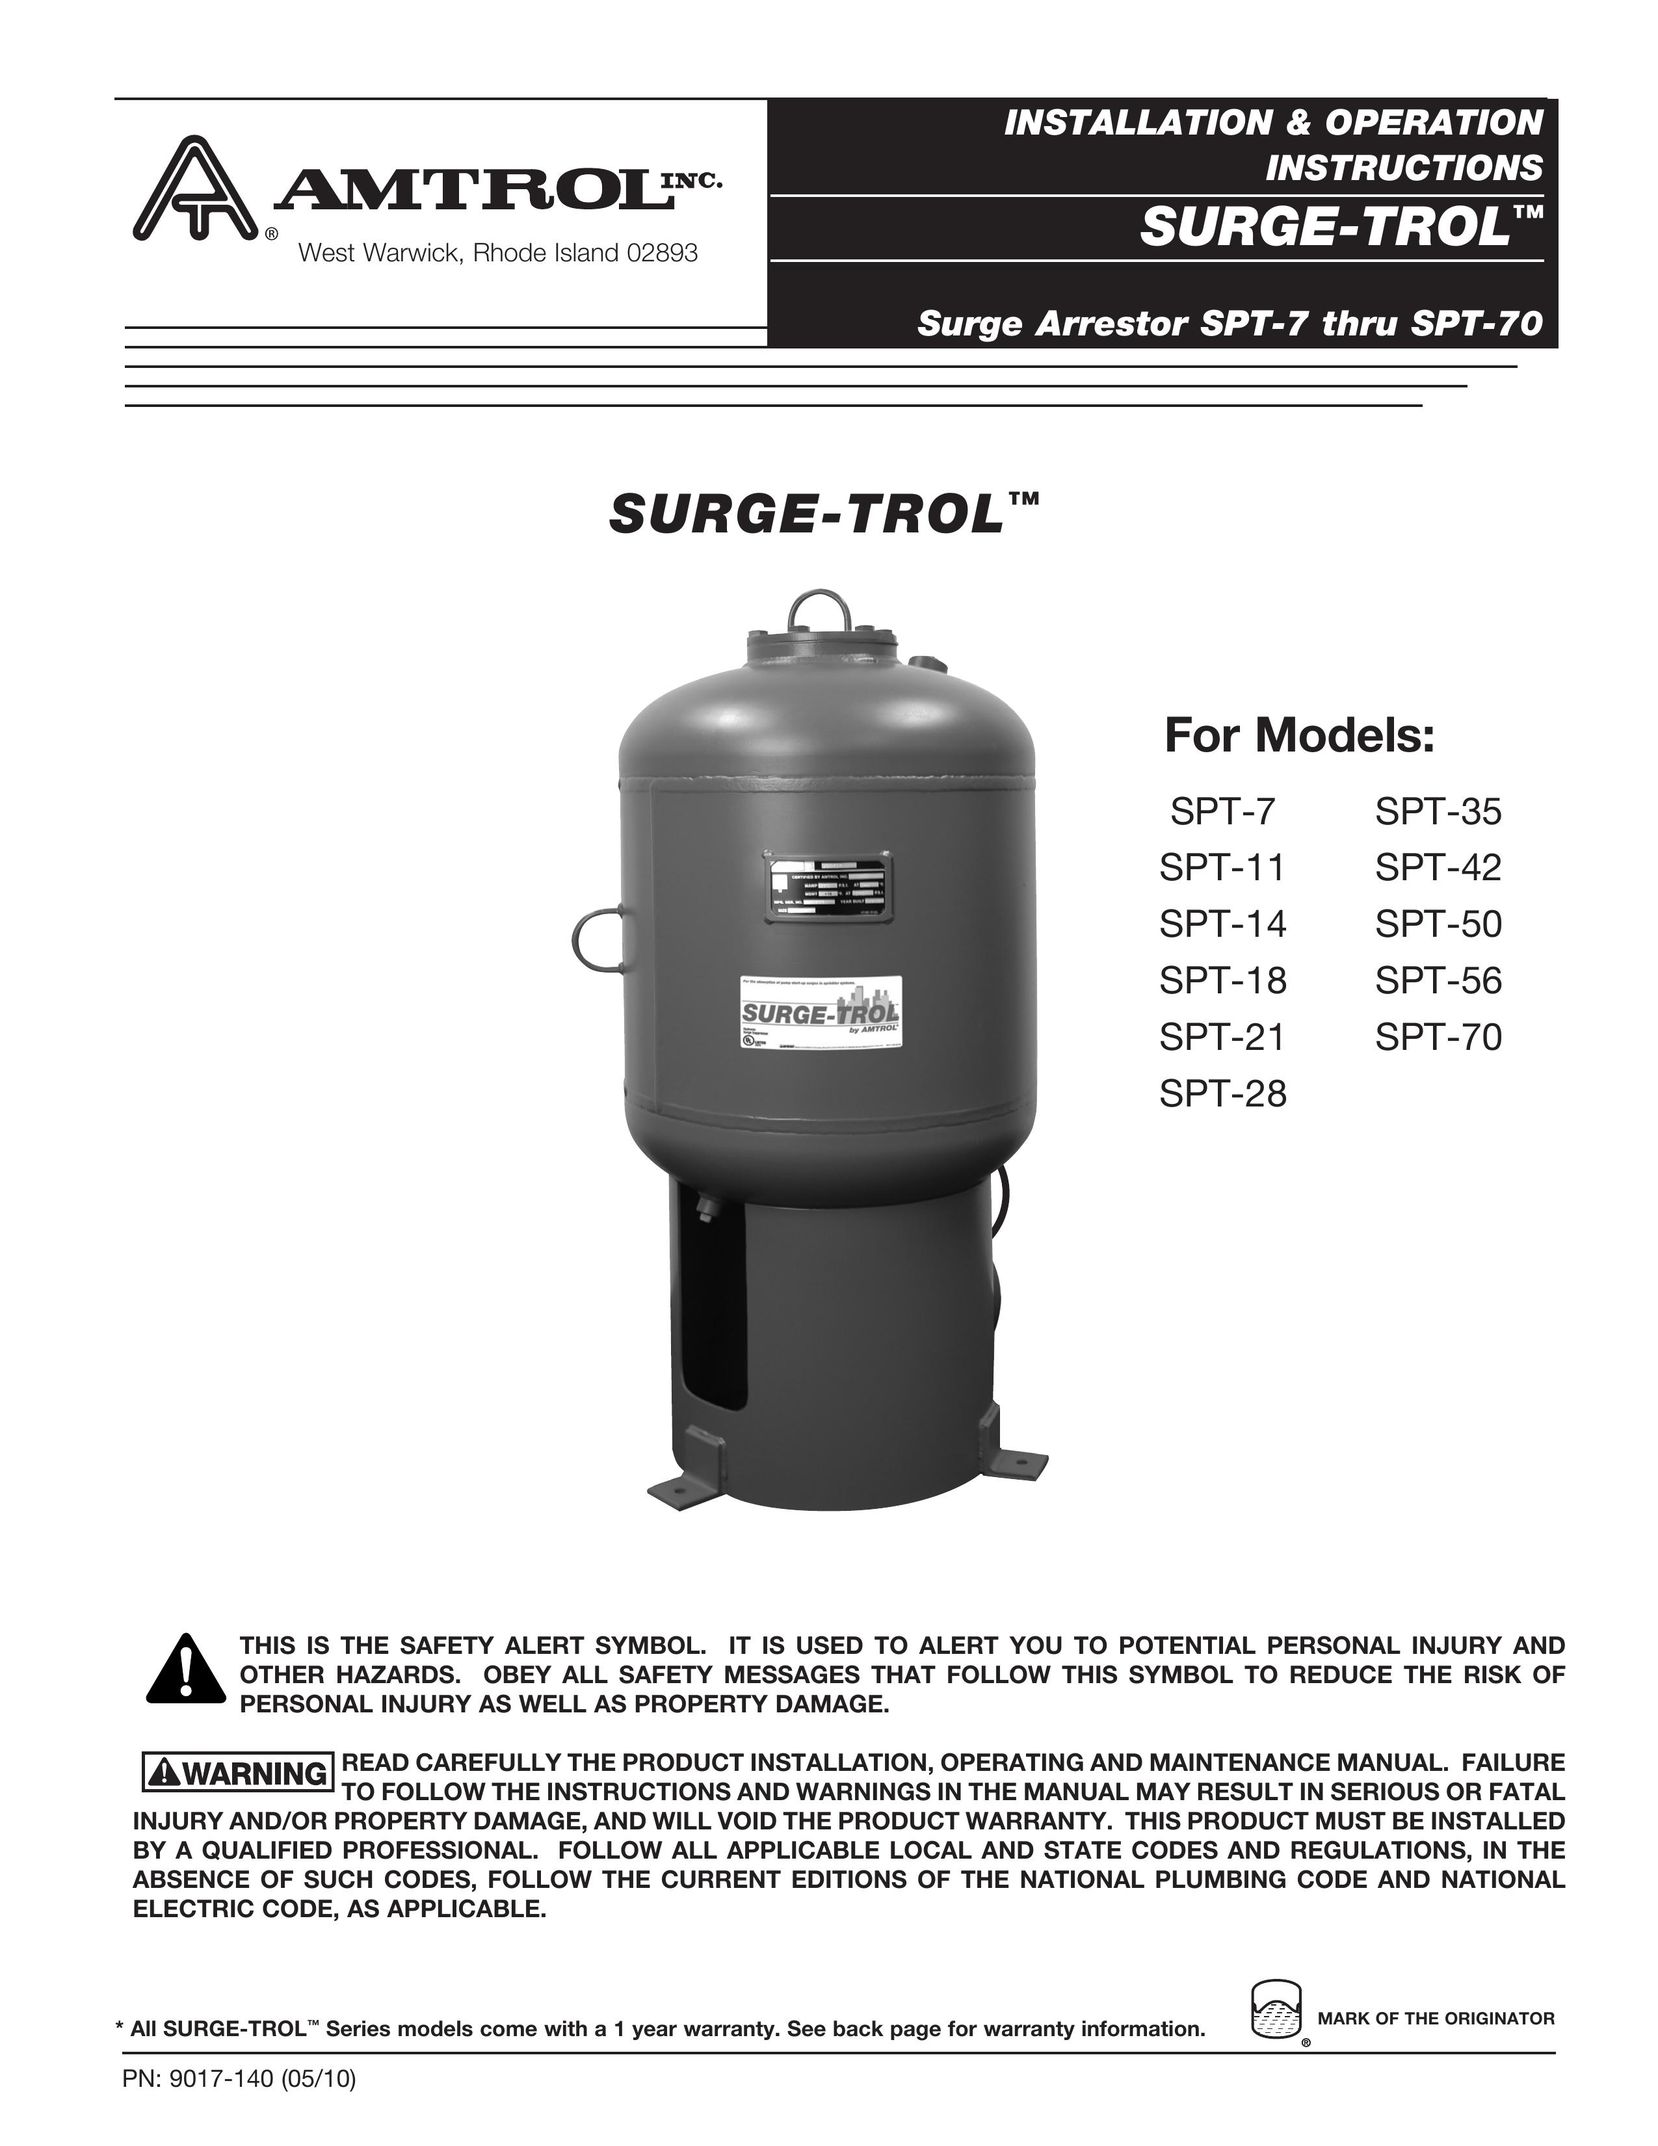 Amtrol SPT-70 Surge Protector User Manual